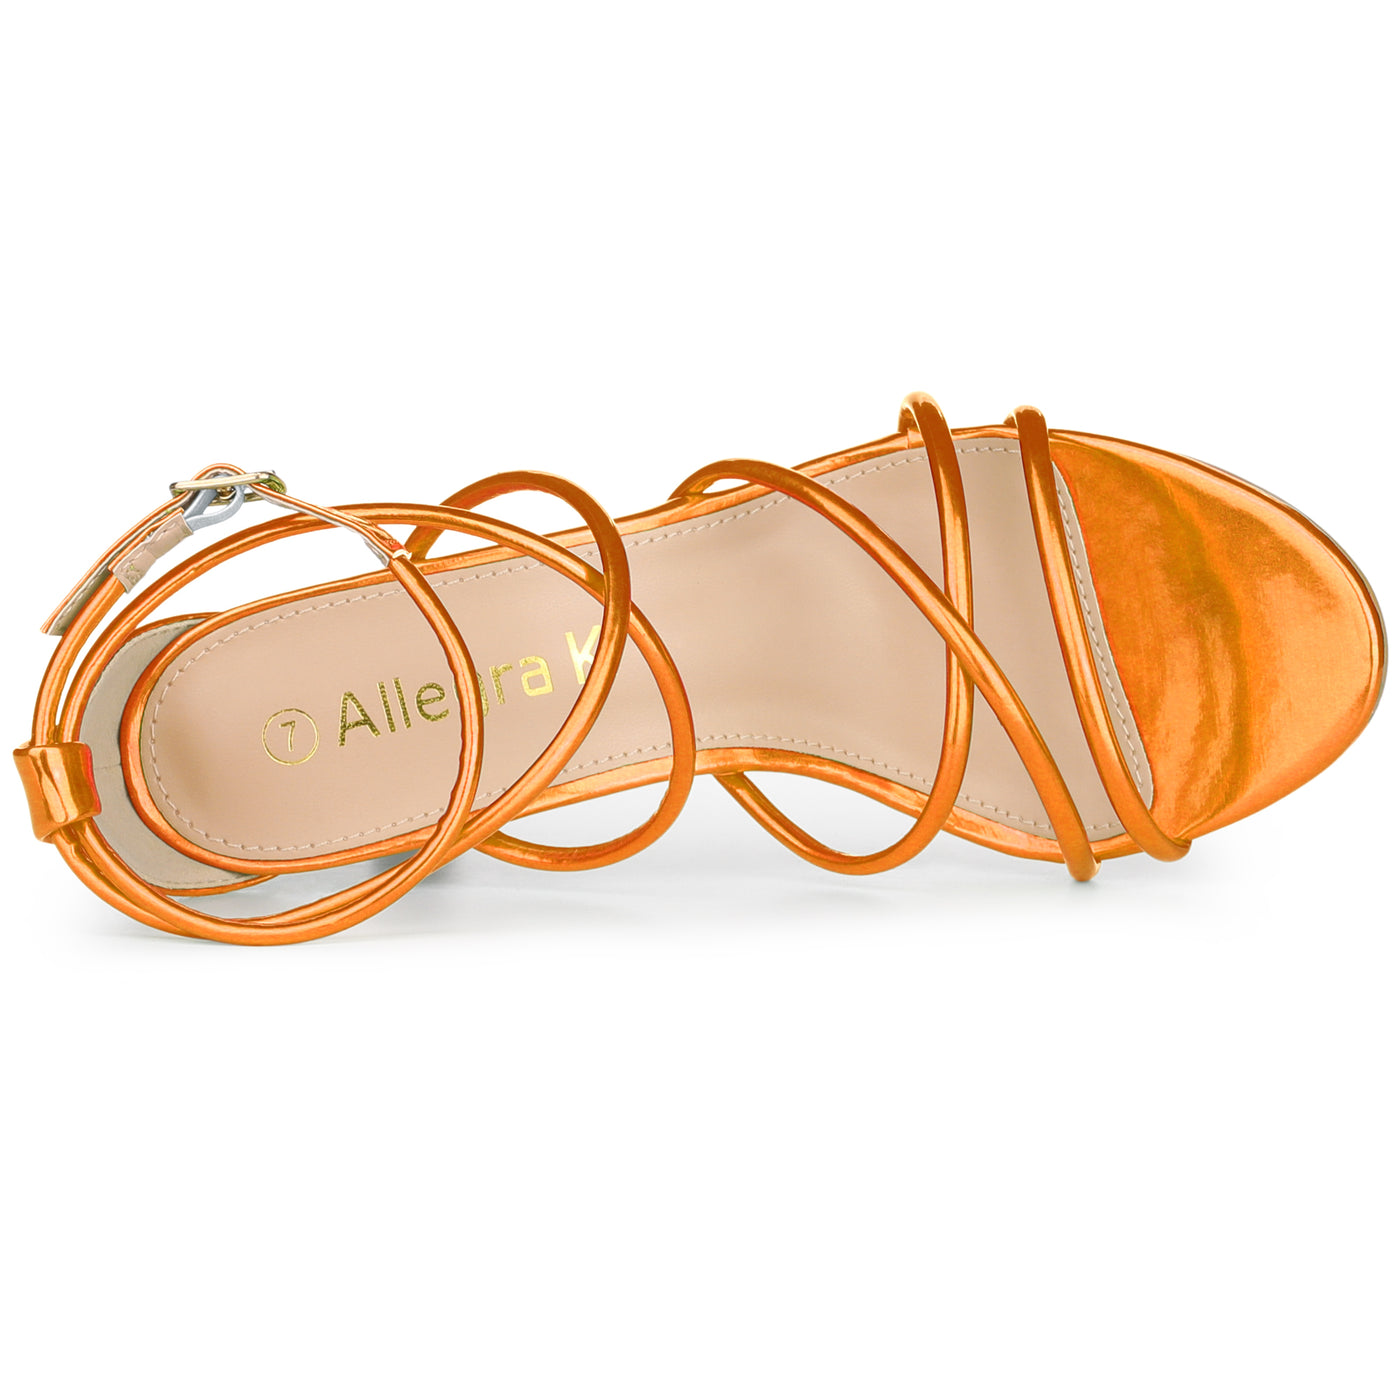 Allegra K Elegant Open Toe Strappy Strap Stiletto Heel Sandals